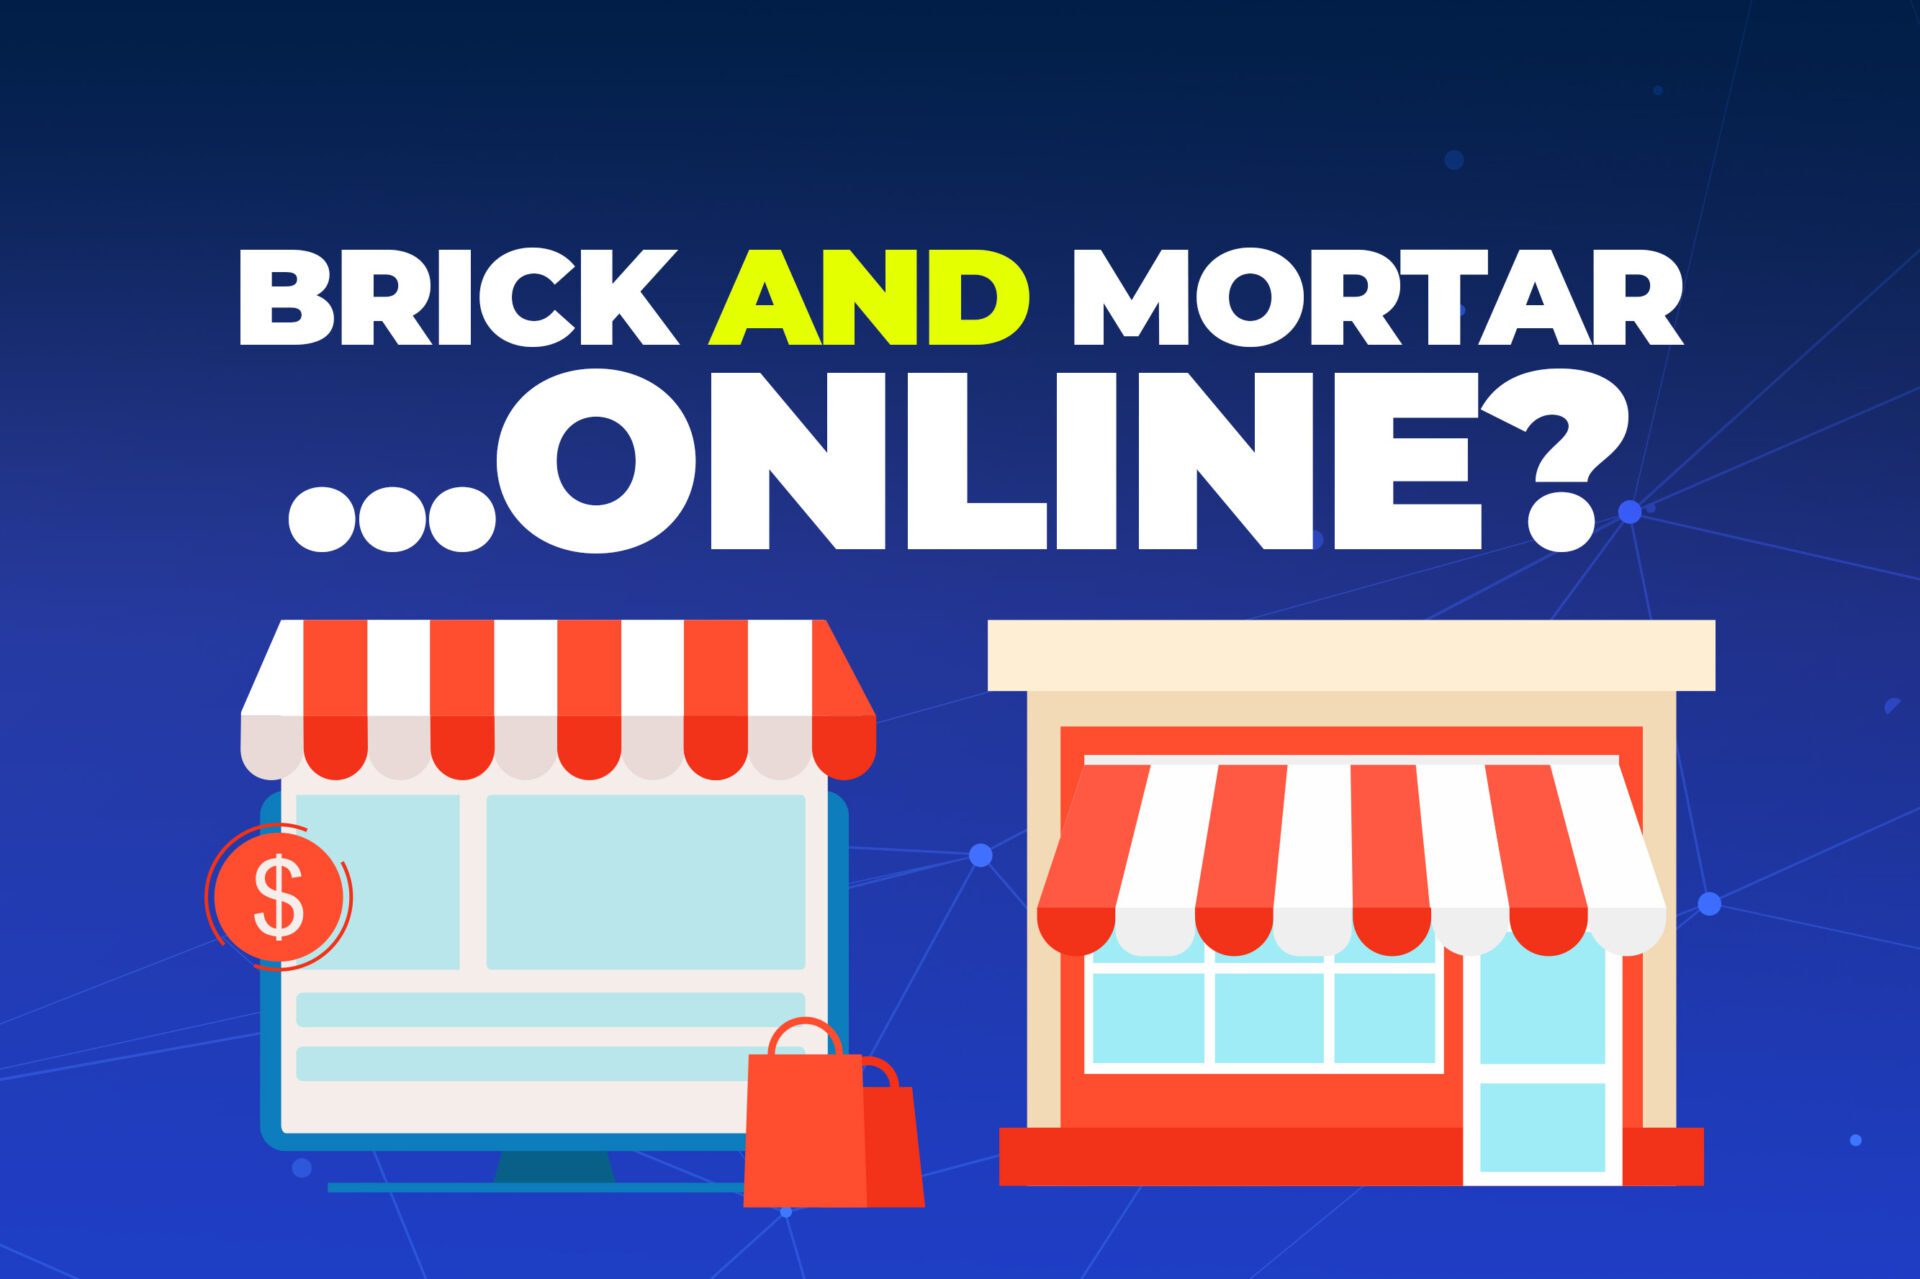 Brick-and-Mortar…Online?